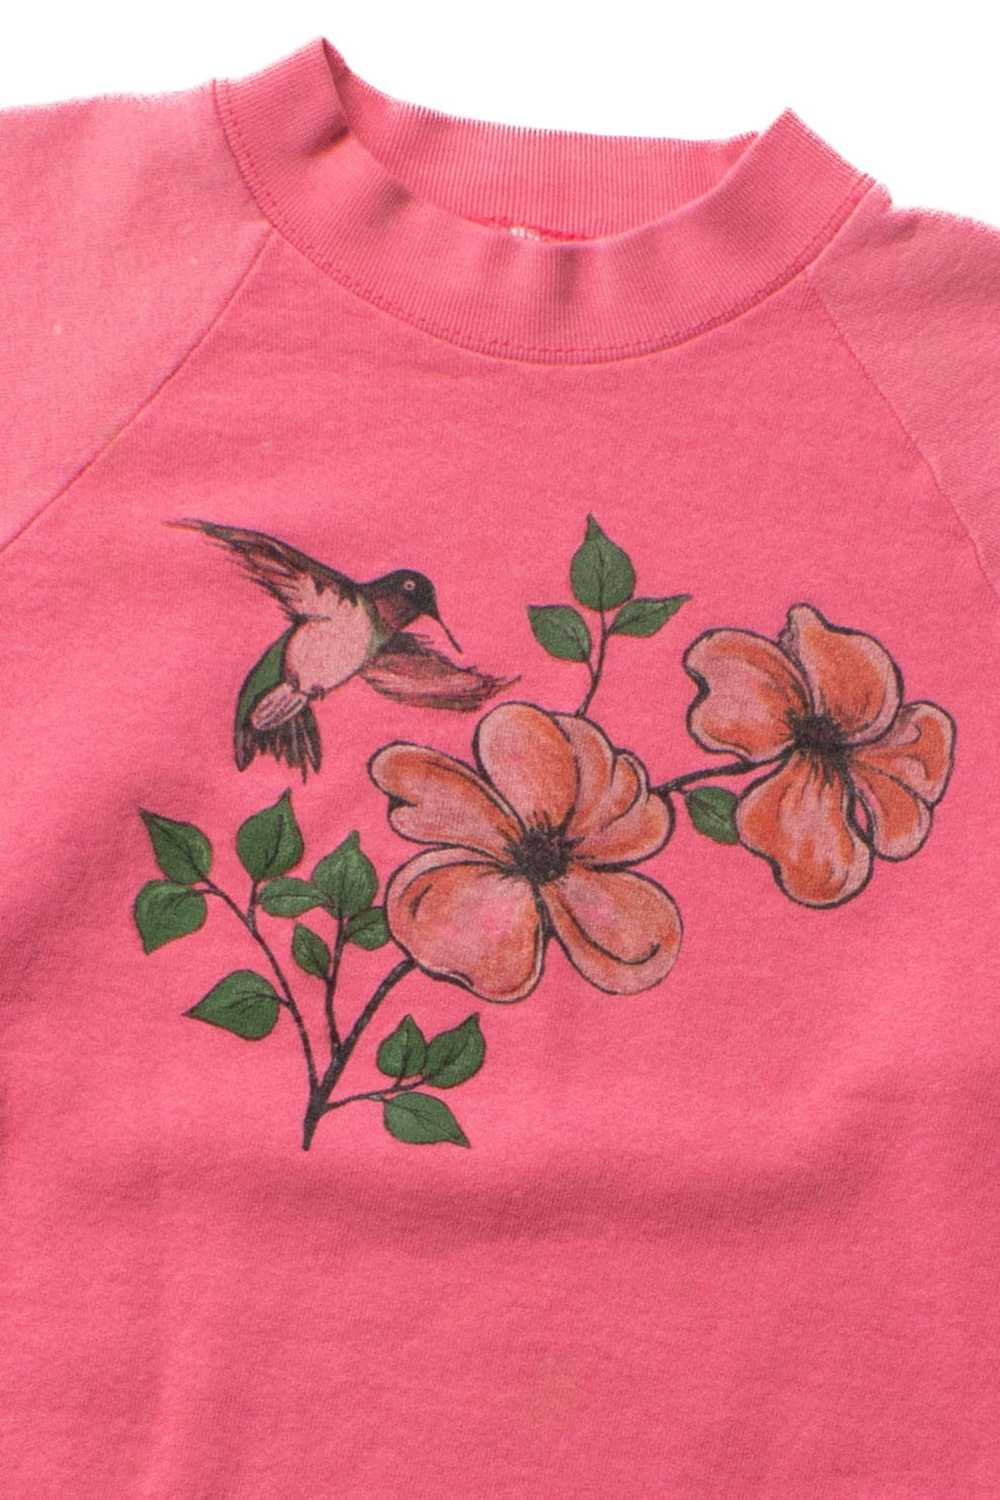 Vintage Pink Hummingbird Sweatshirt (1990s) - image 2